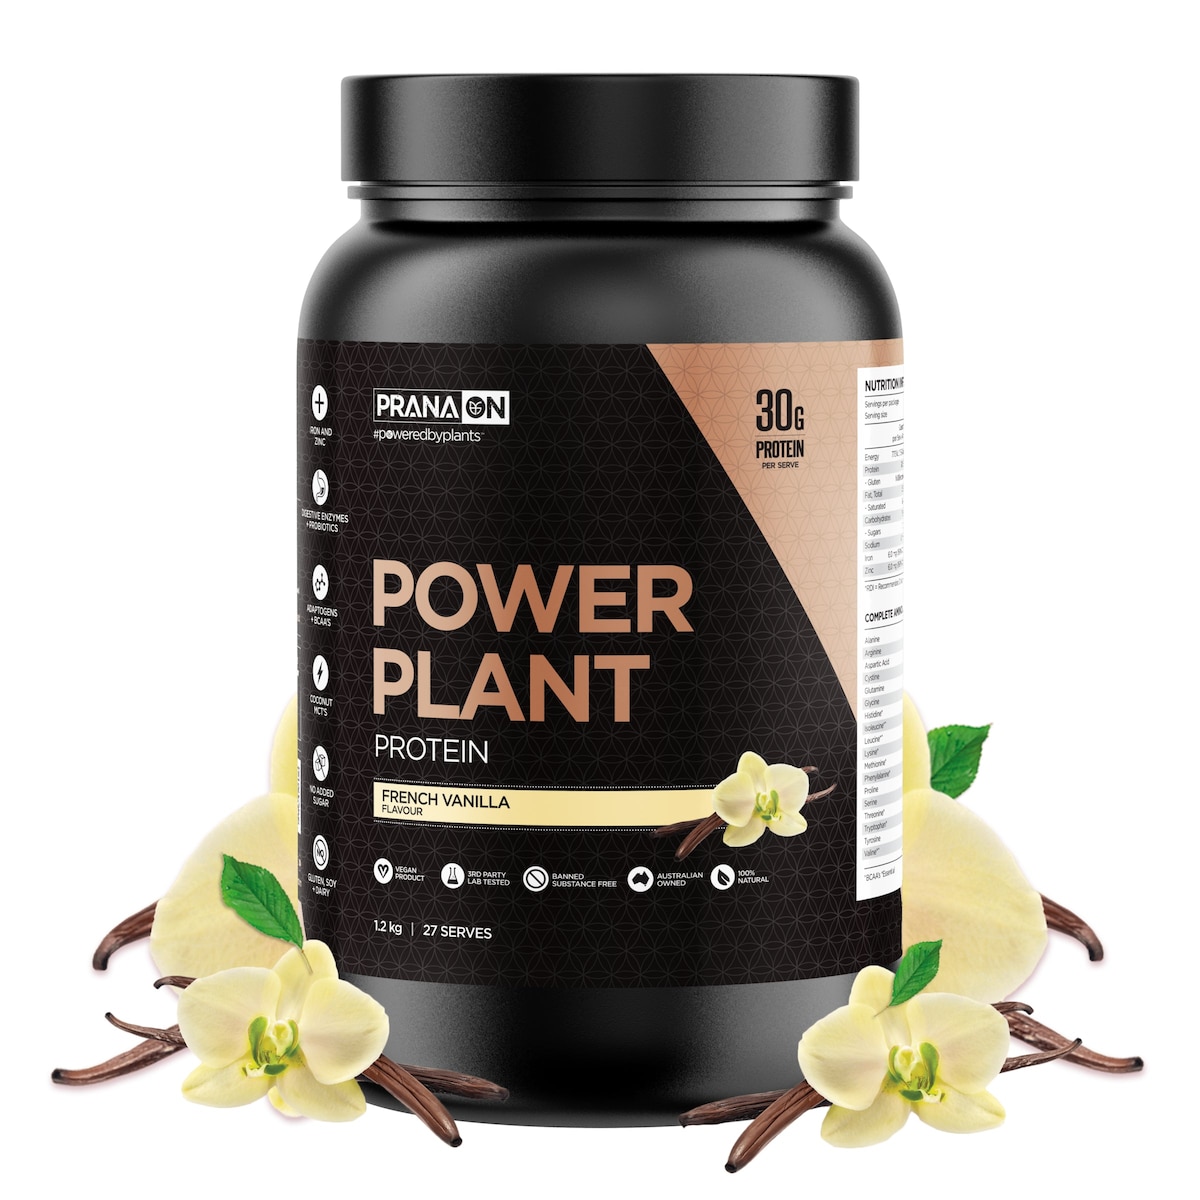 Pranaon Power Plant Protein French Vanilla 1.2kg Australia